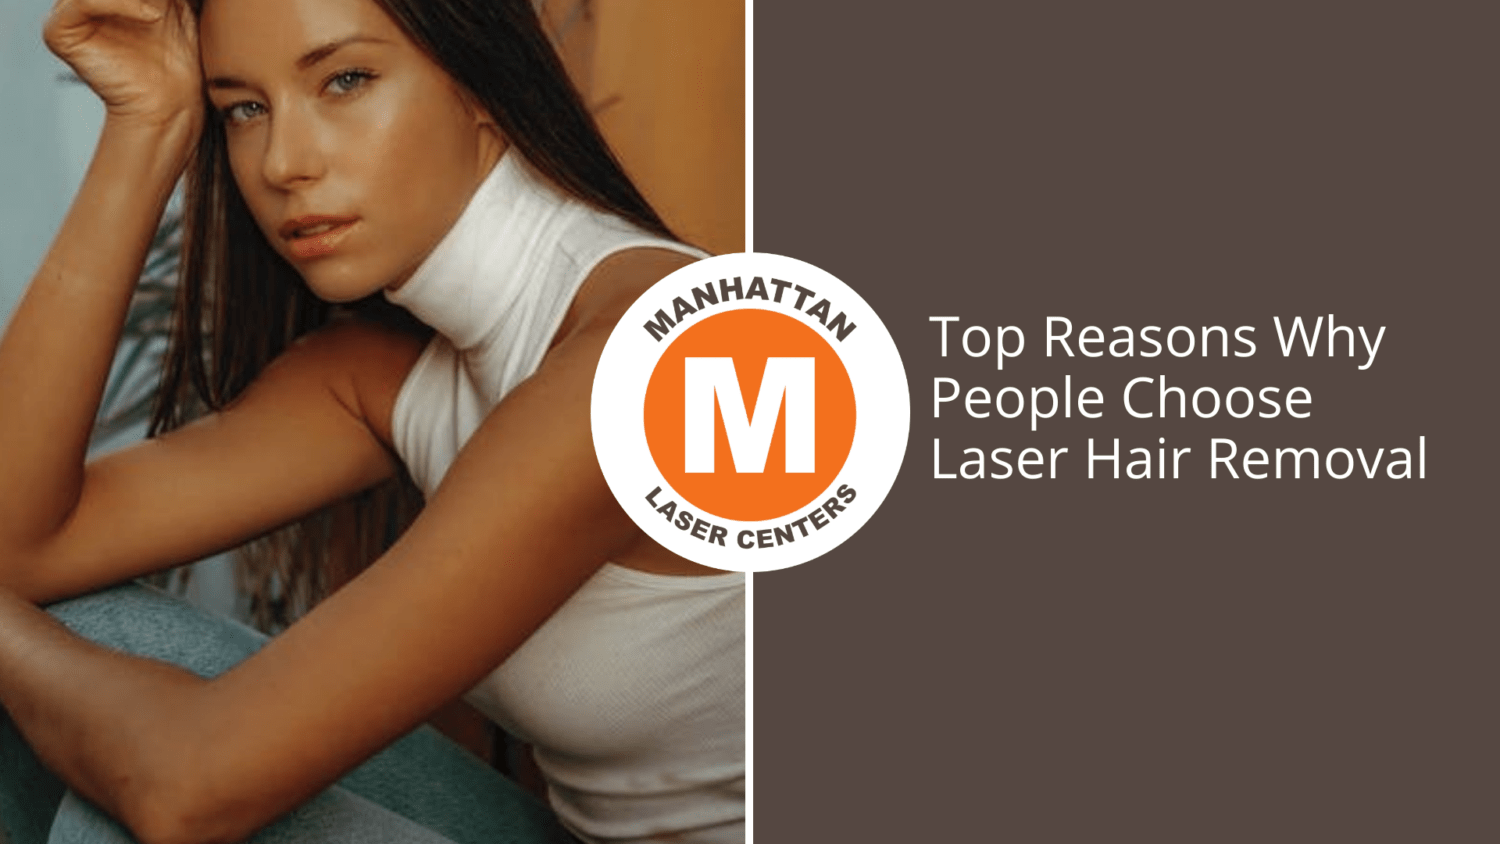 Top Reasons Why People Choose Laser Hair Removal